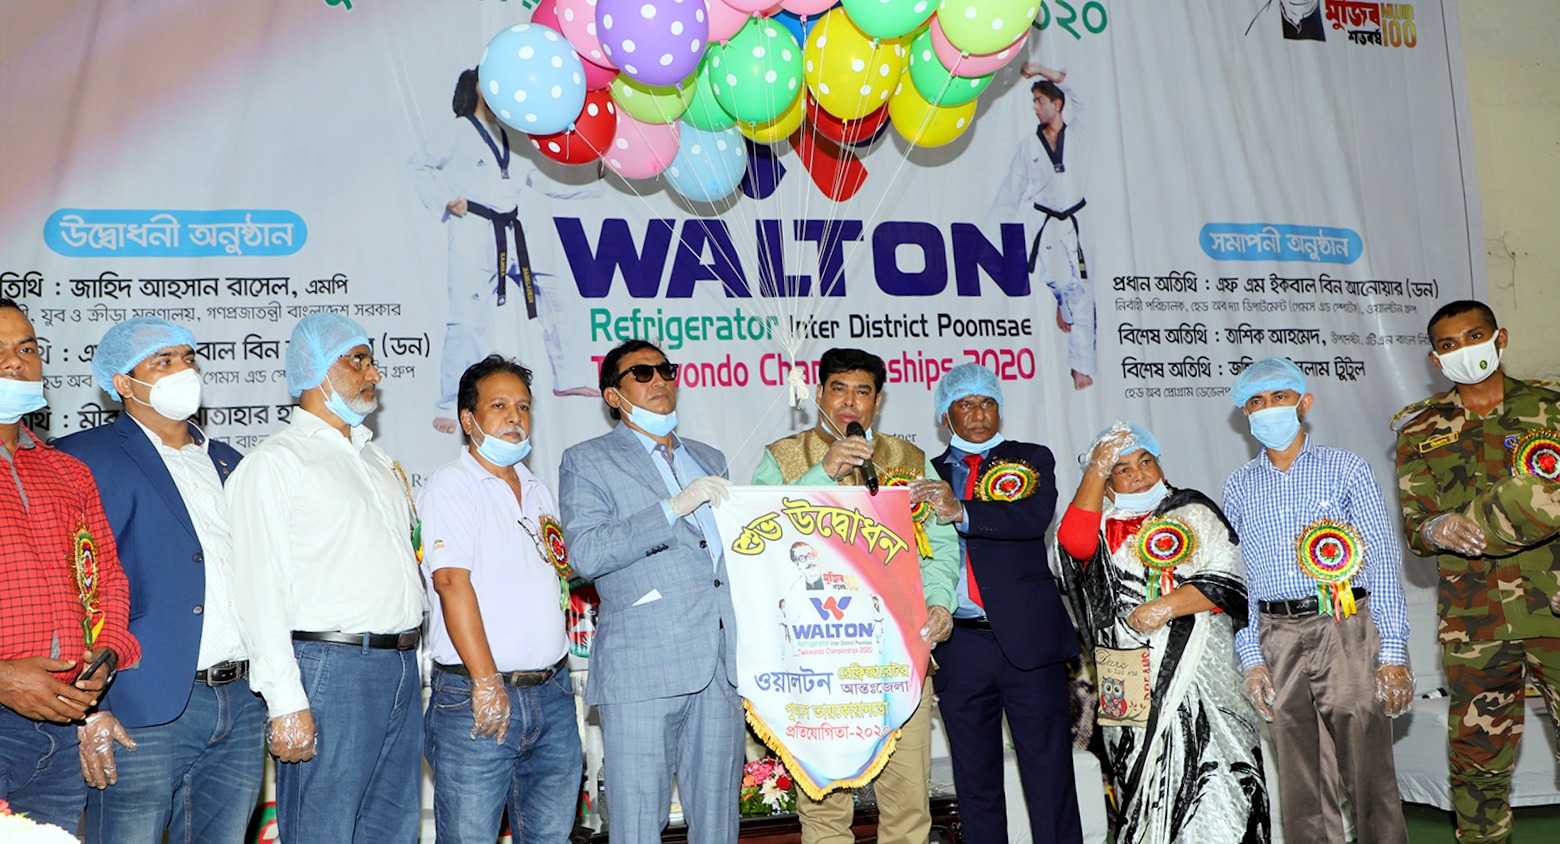 Opening Ceremony of Walton Refrigerator Inter-District Poomsae Taekwondo Championship 2020